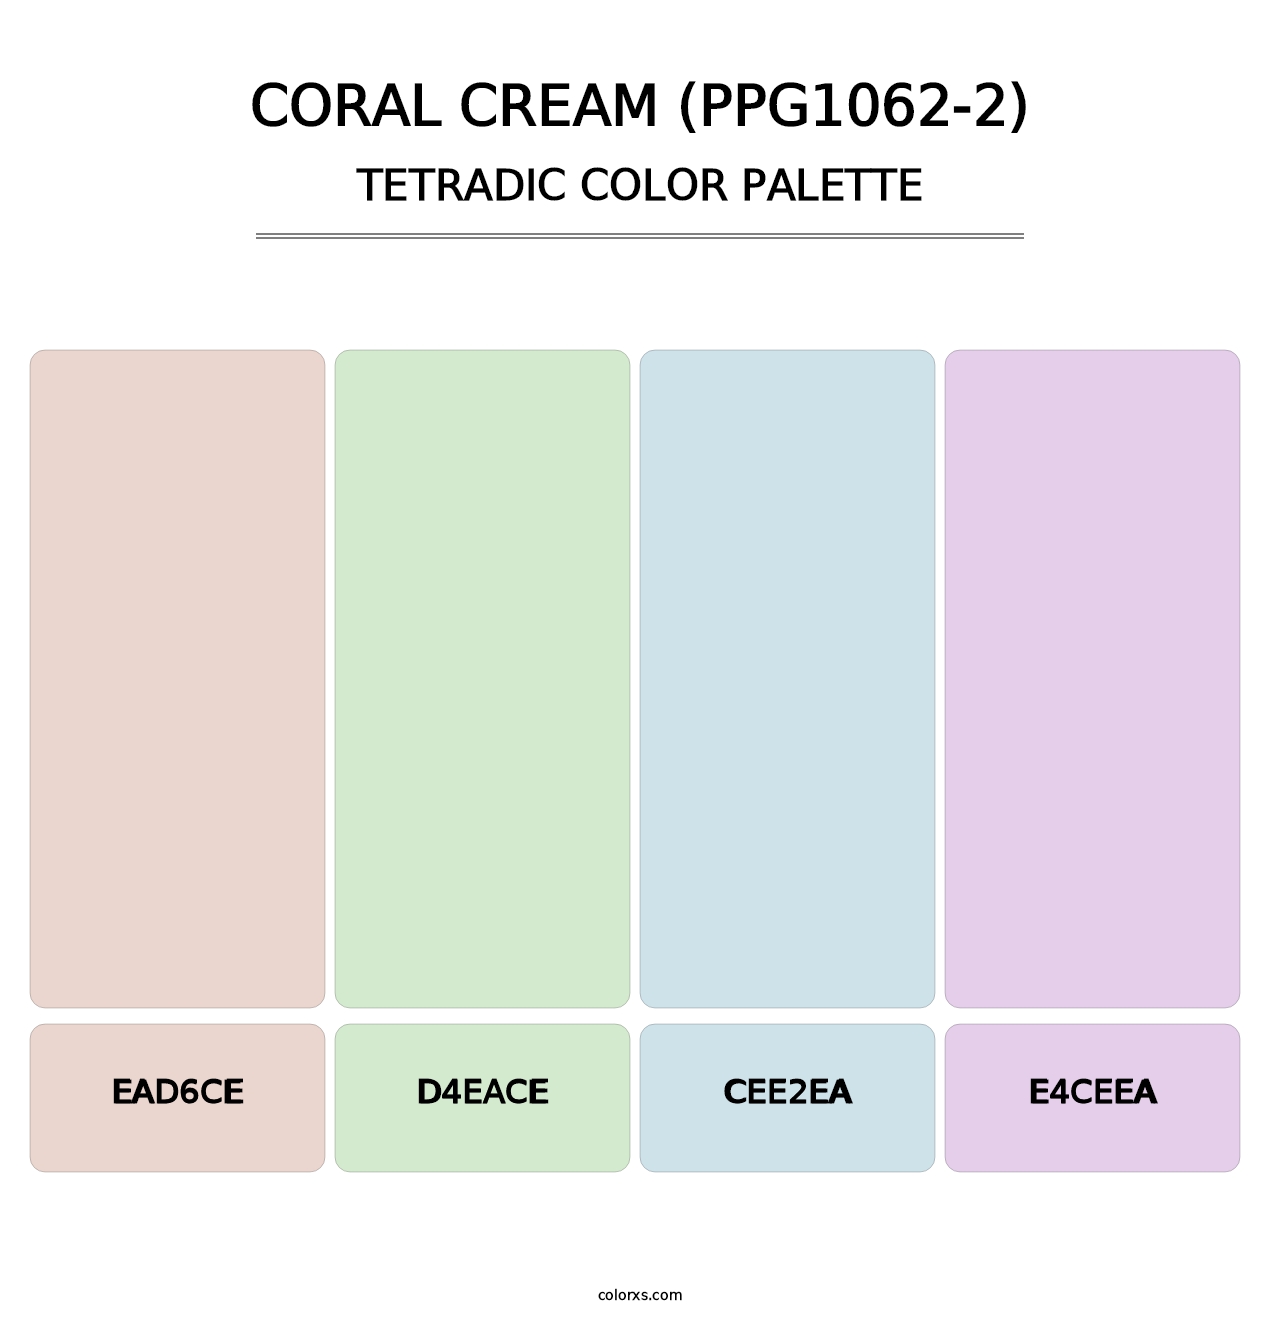 Coral Cream (PPG1062-2) - Tetradic Color Palette